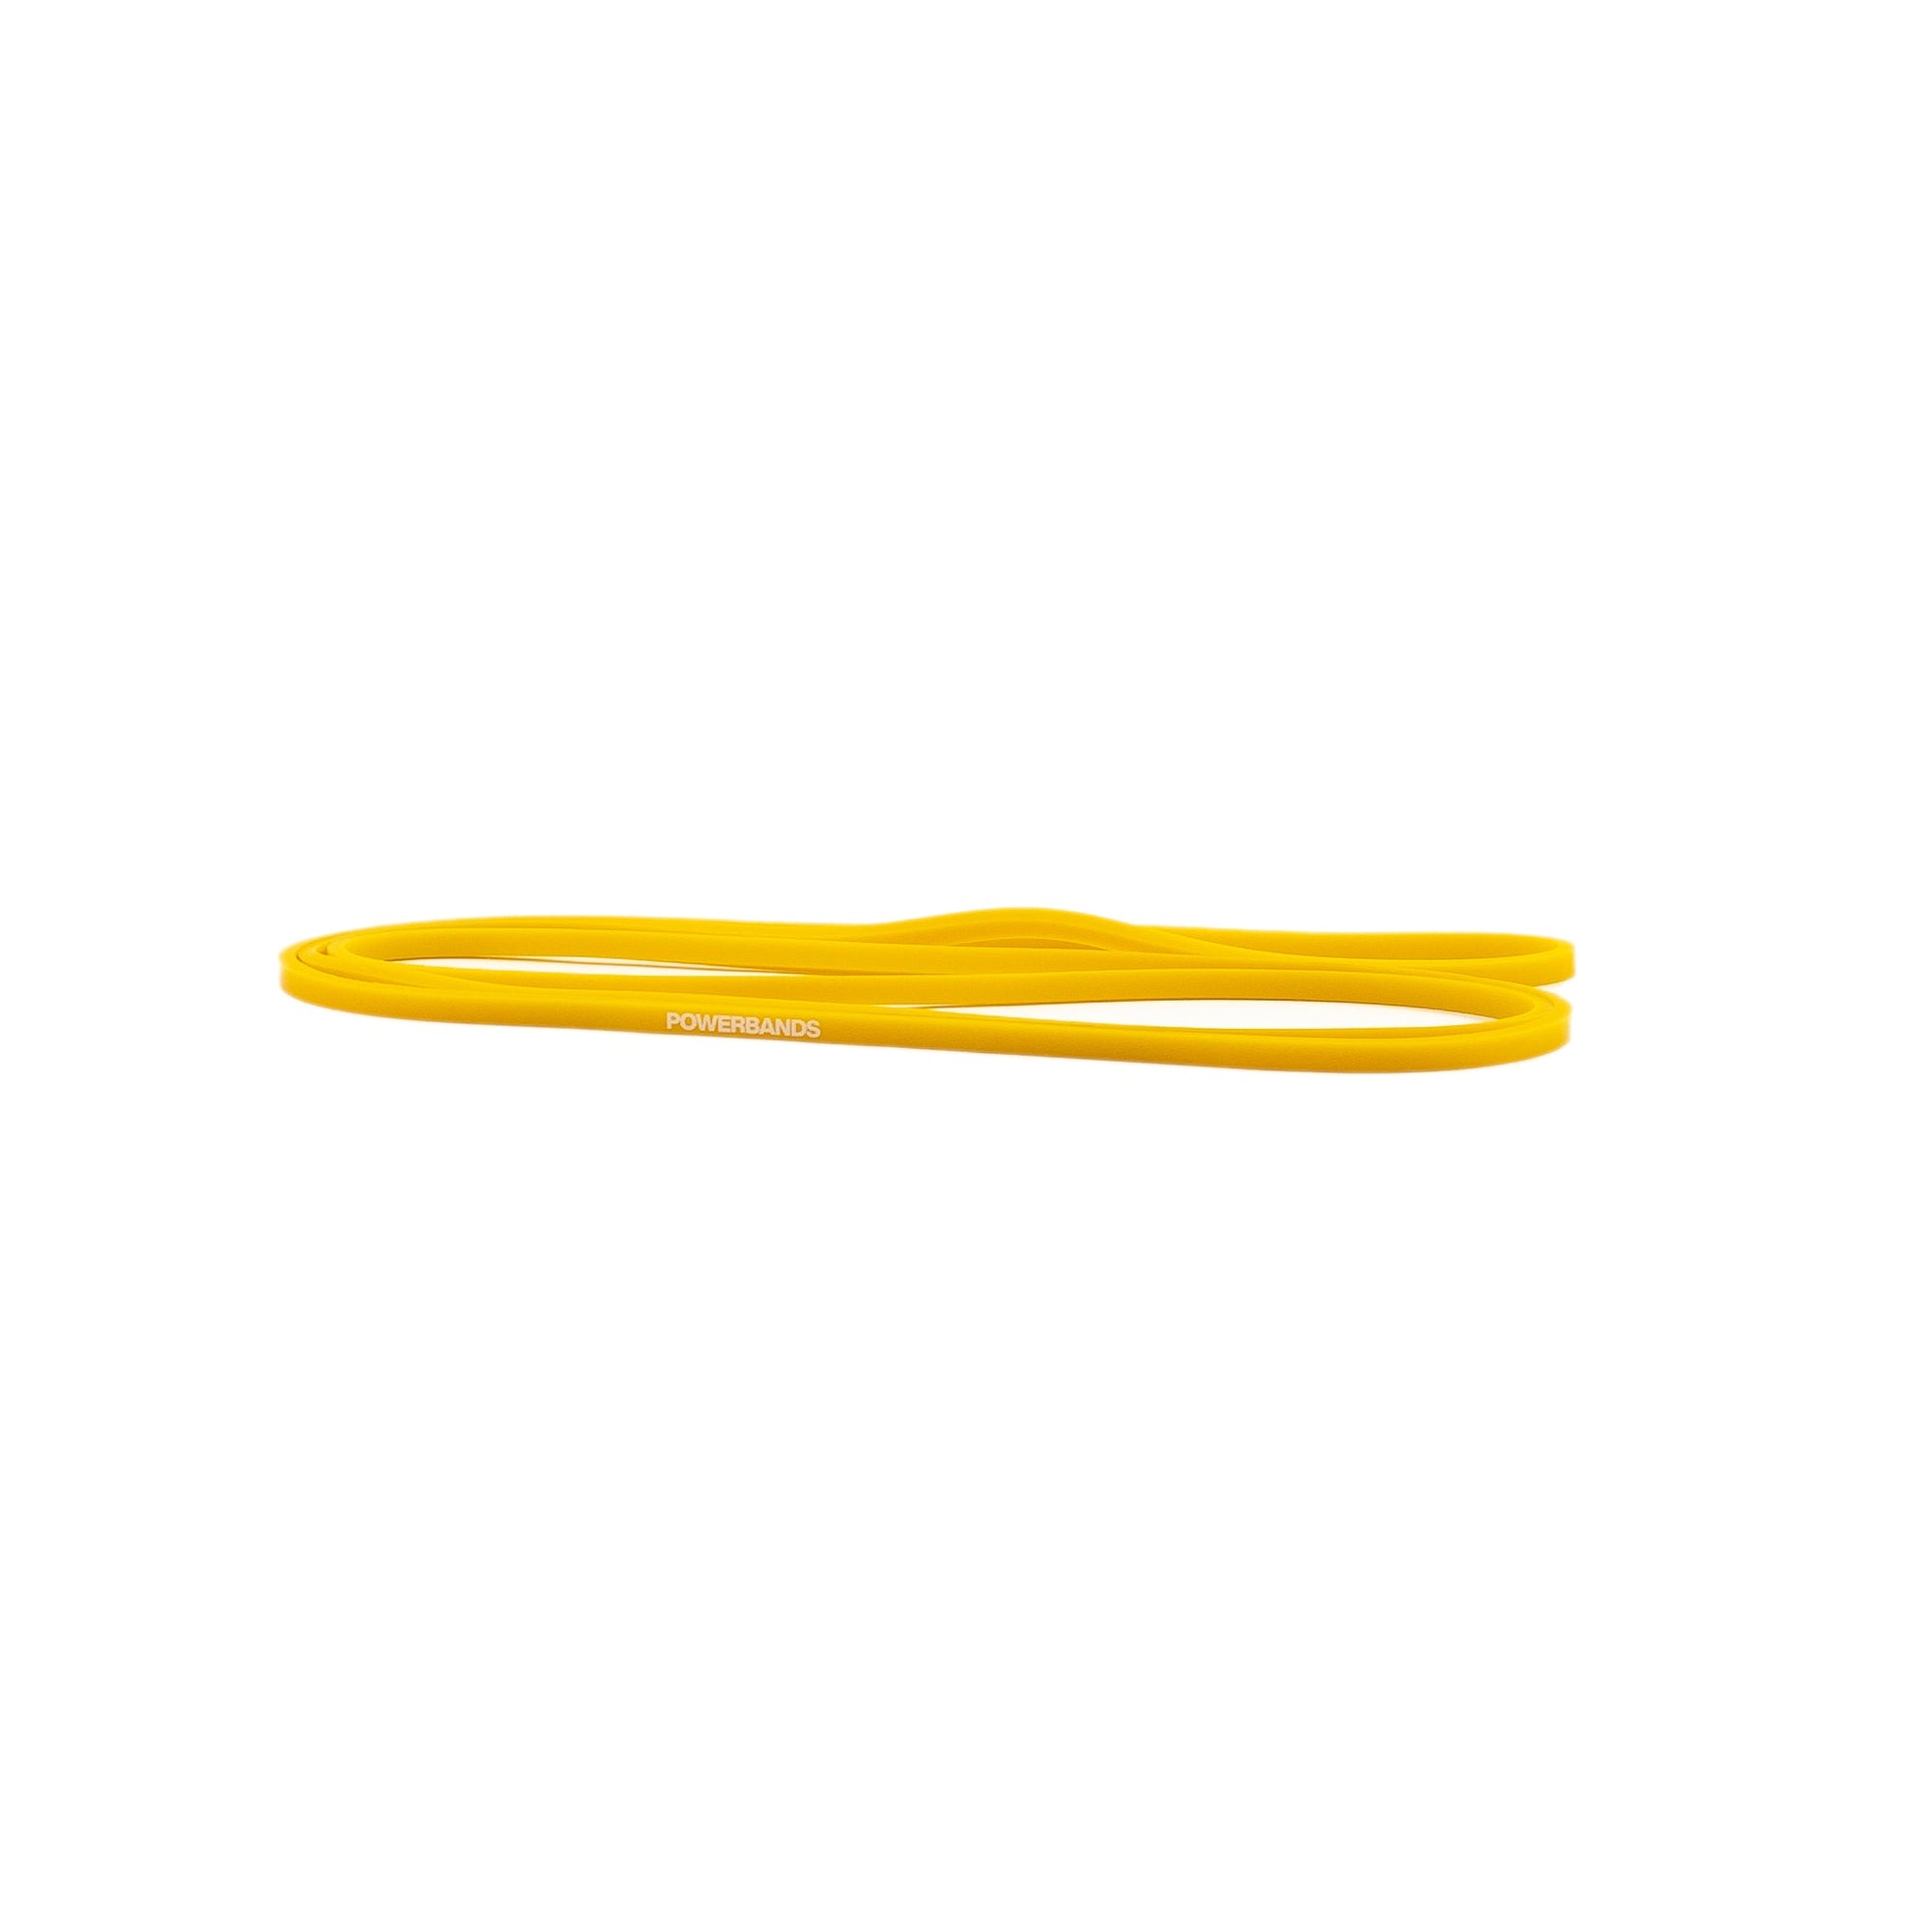 1M Power Band - X-Light (Yellow) - POWERBANDS®